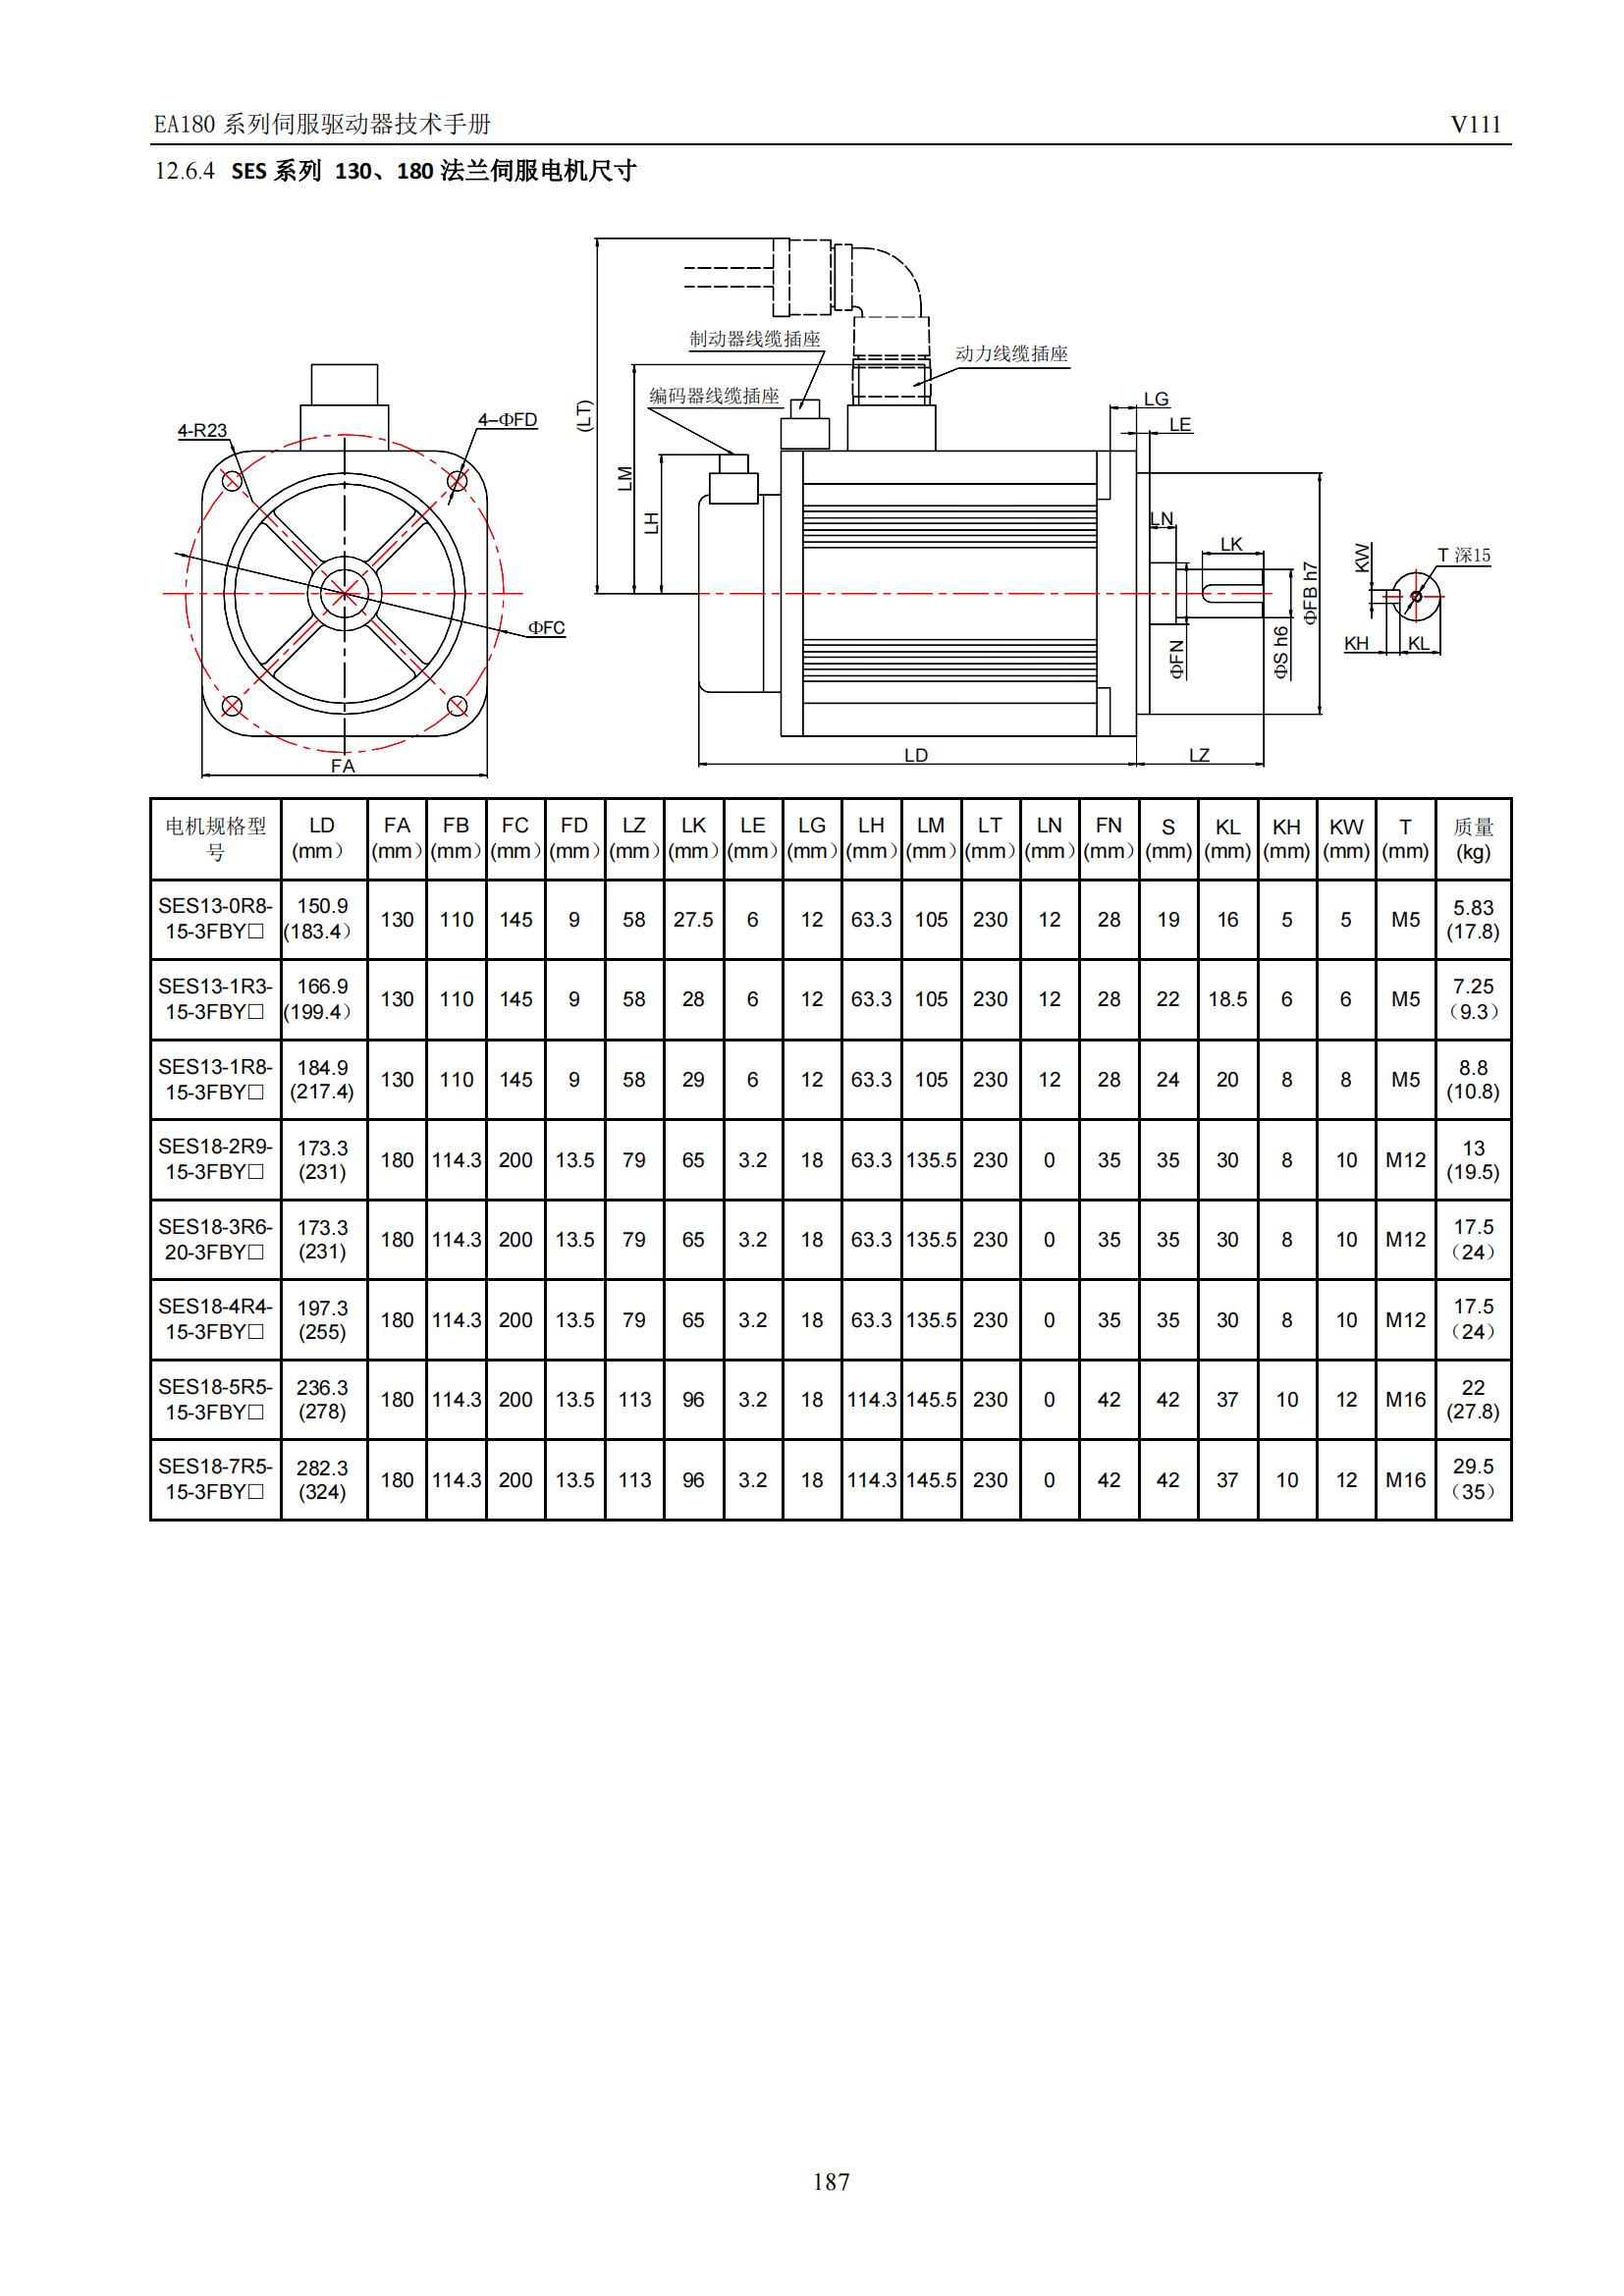 EA180系列模拟量脉冲型伺服驱动器技术手册 V111_10.jpg